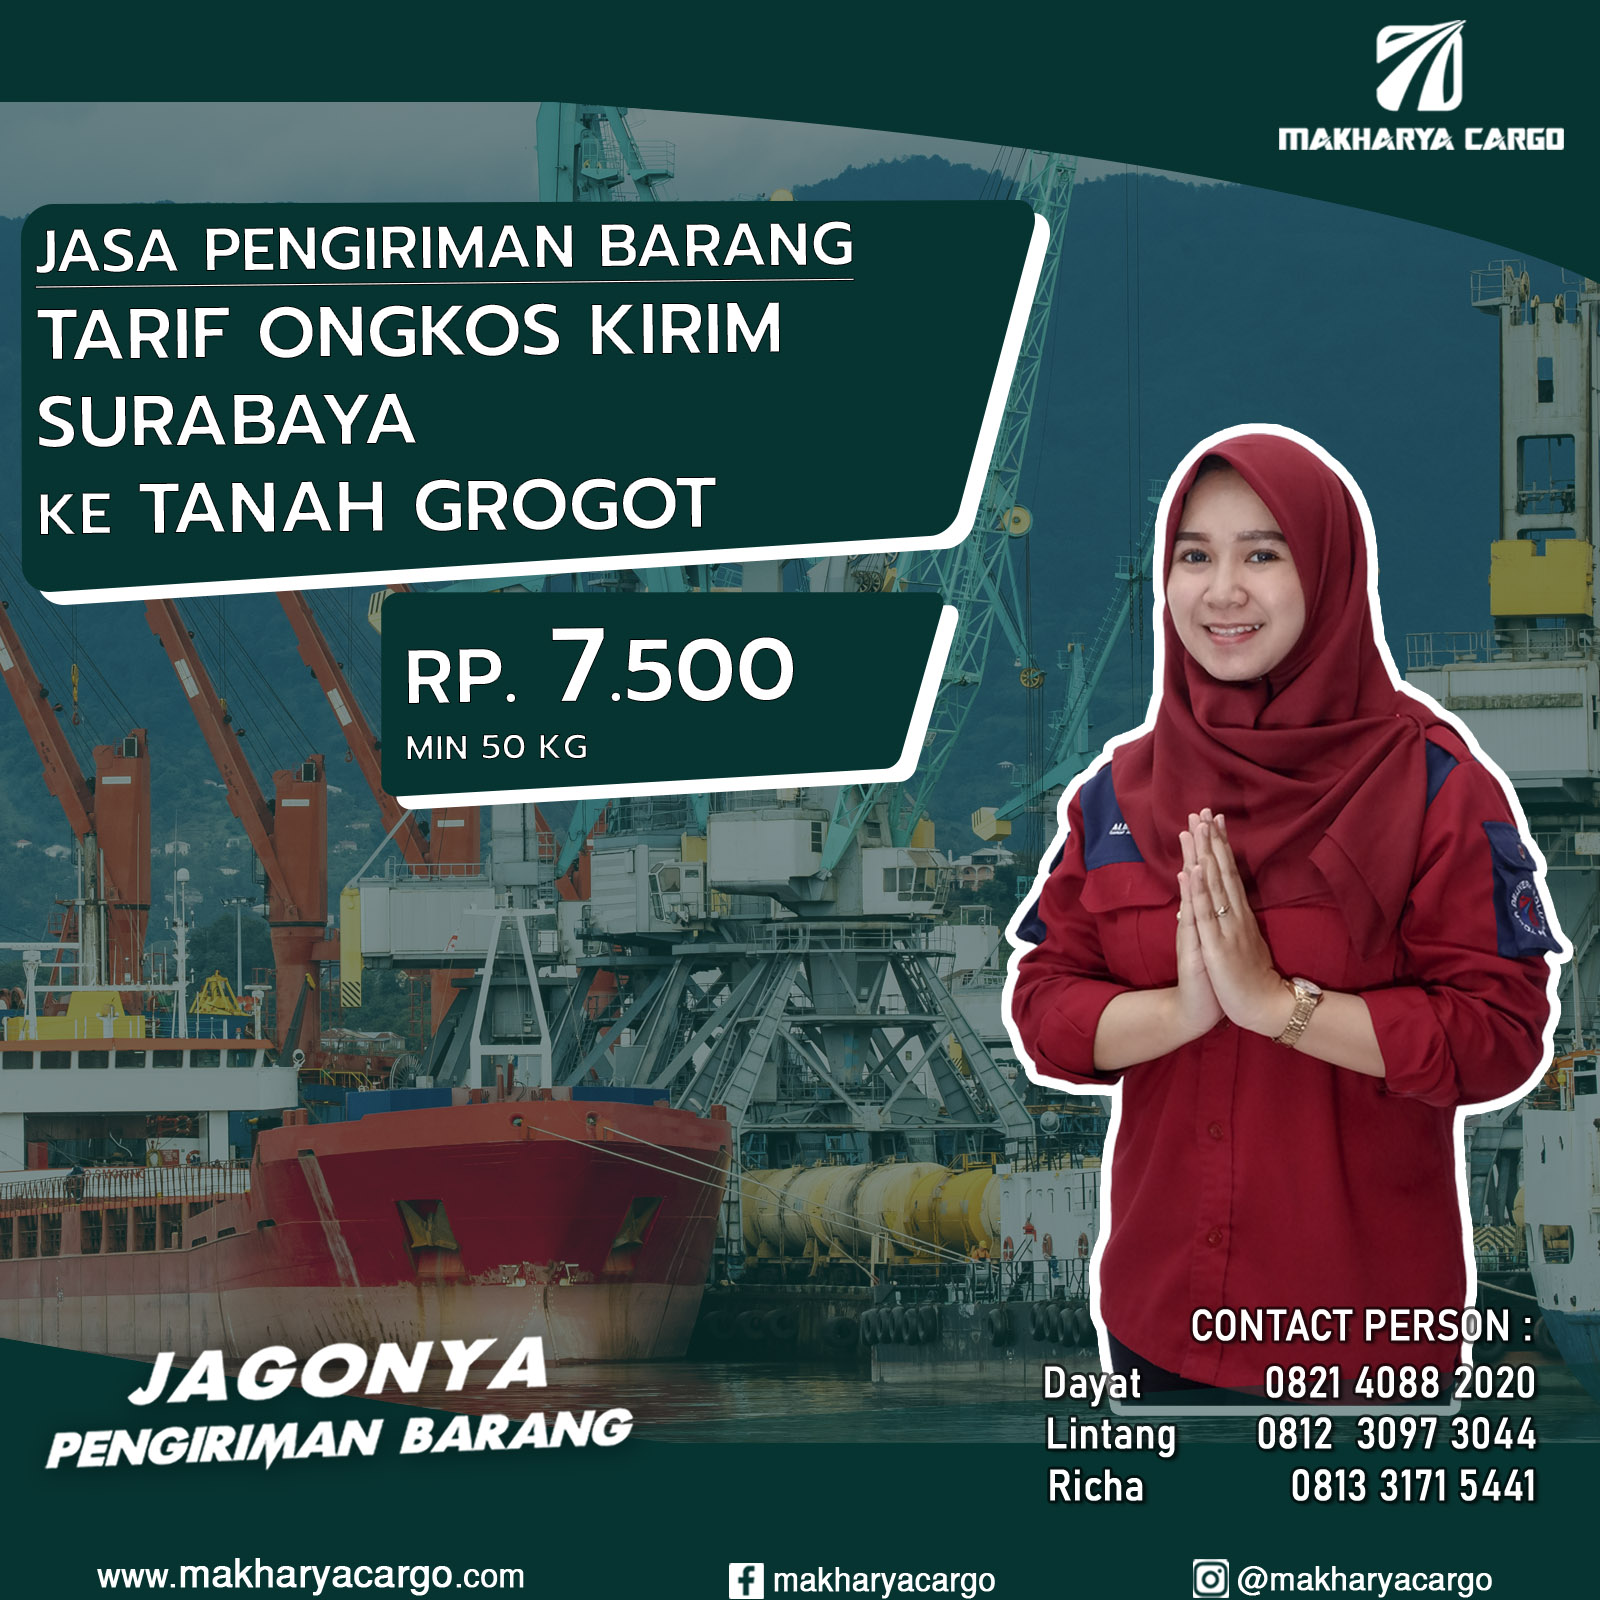 Tarif Ongkos Kirim Surabaya Tanah Grogot